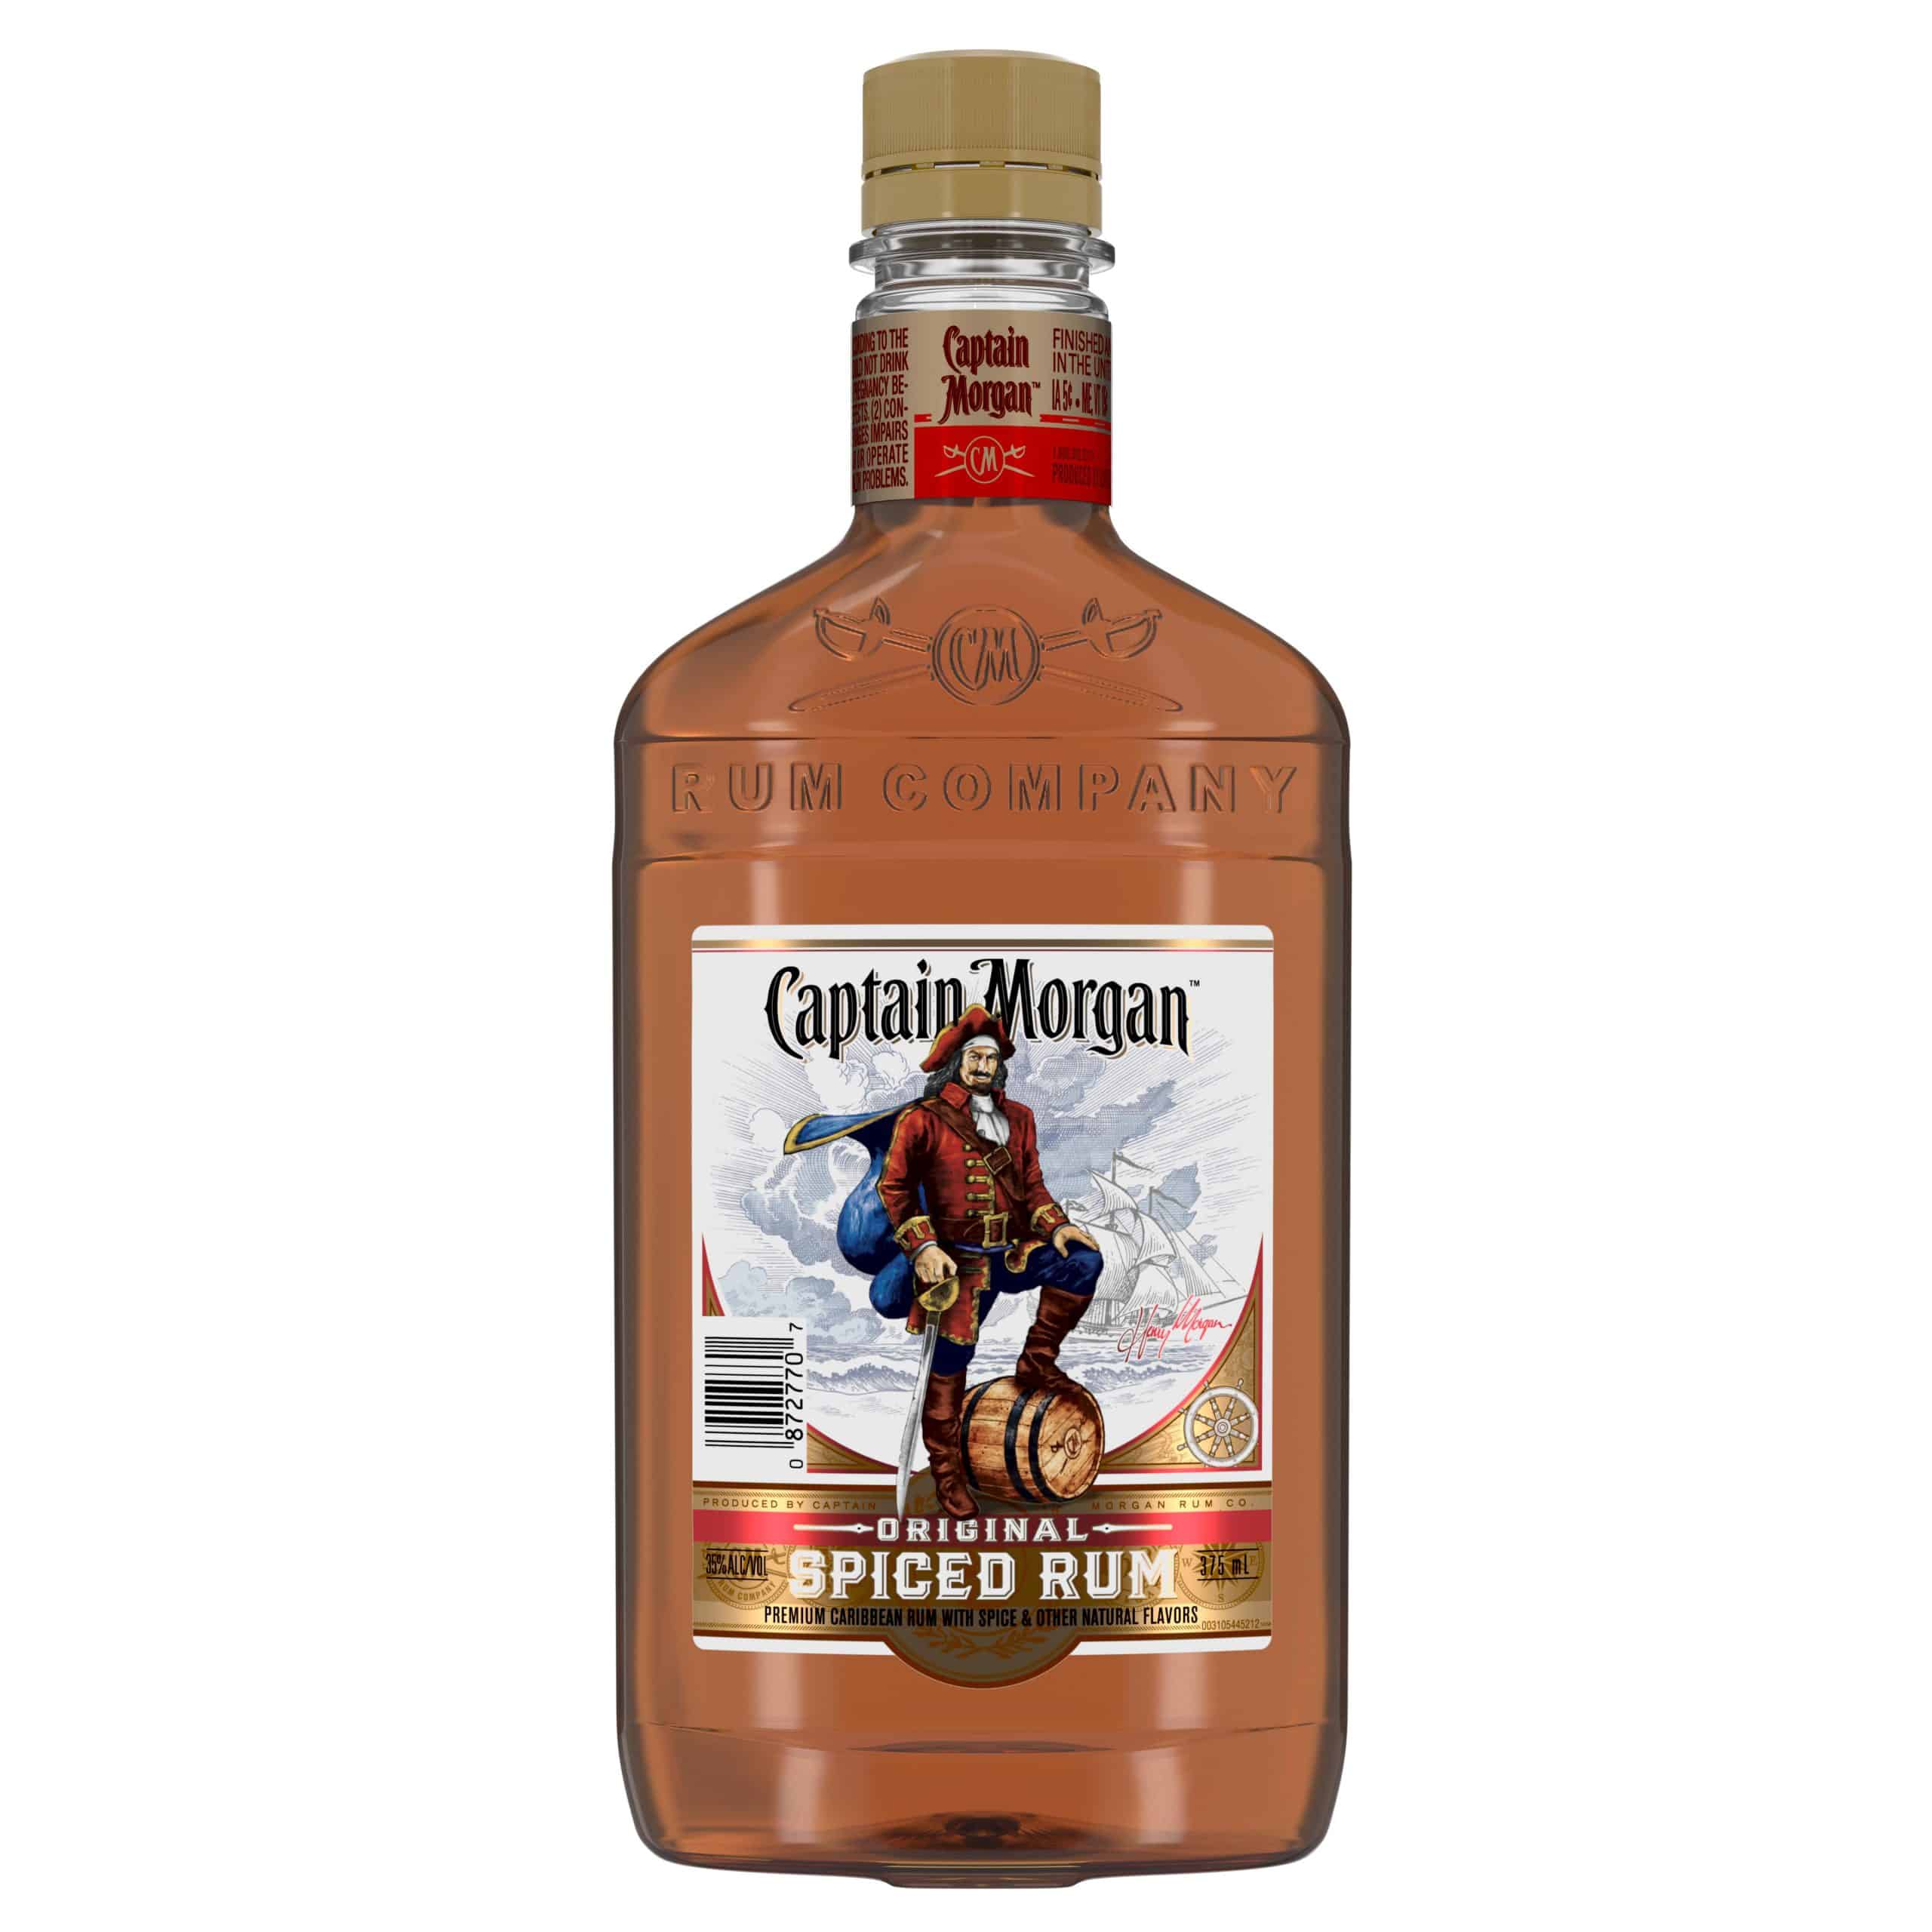 Captain Morgan Original Spiced Rum, 375 mL (70 Proof)